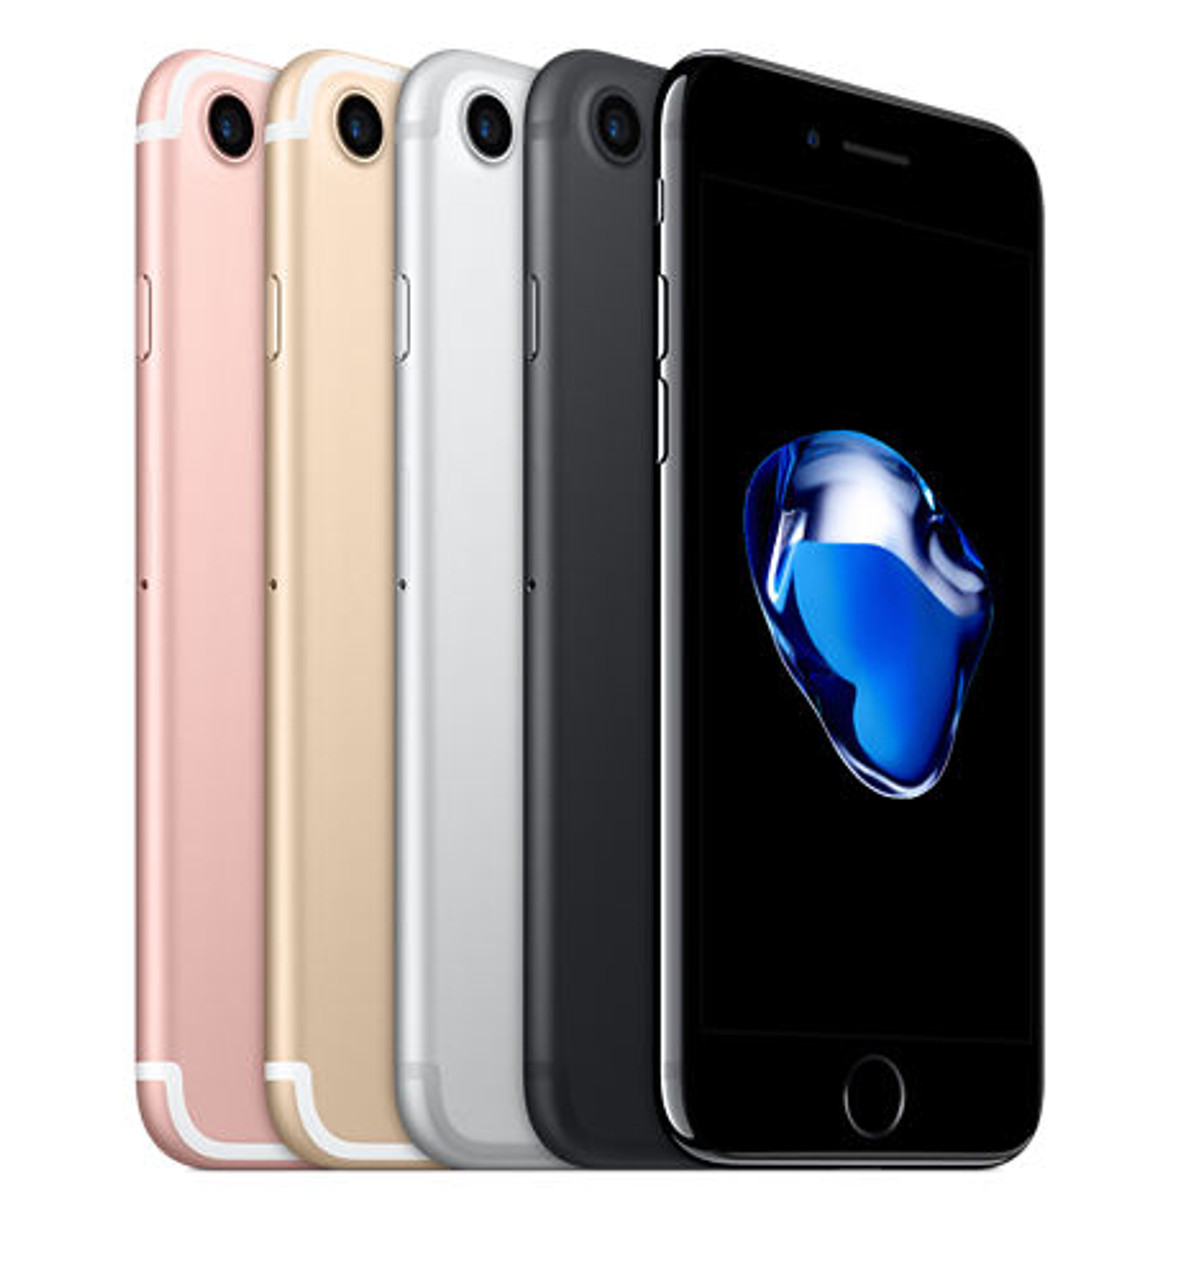 Apple iPhone 7 Plus ( 32 GB Storage, 0 GB RAM ) Online at Best Price On